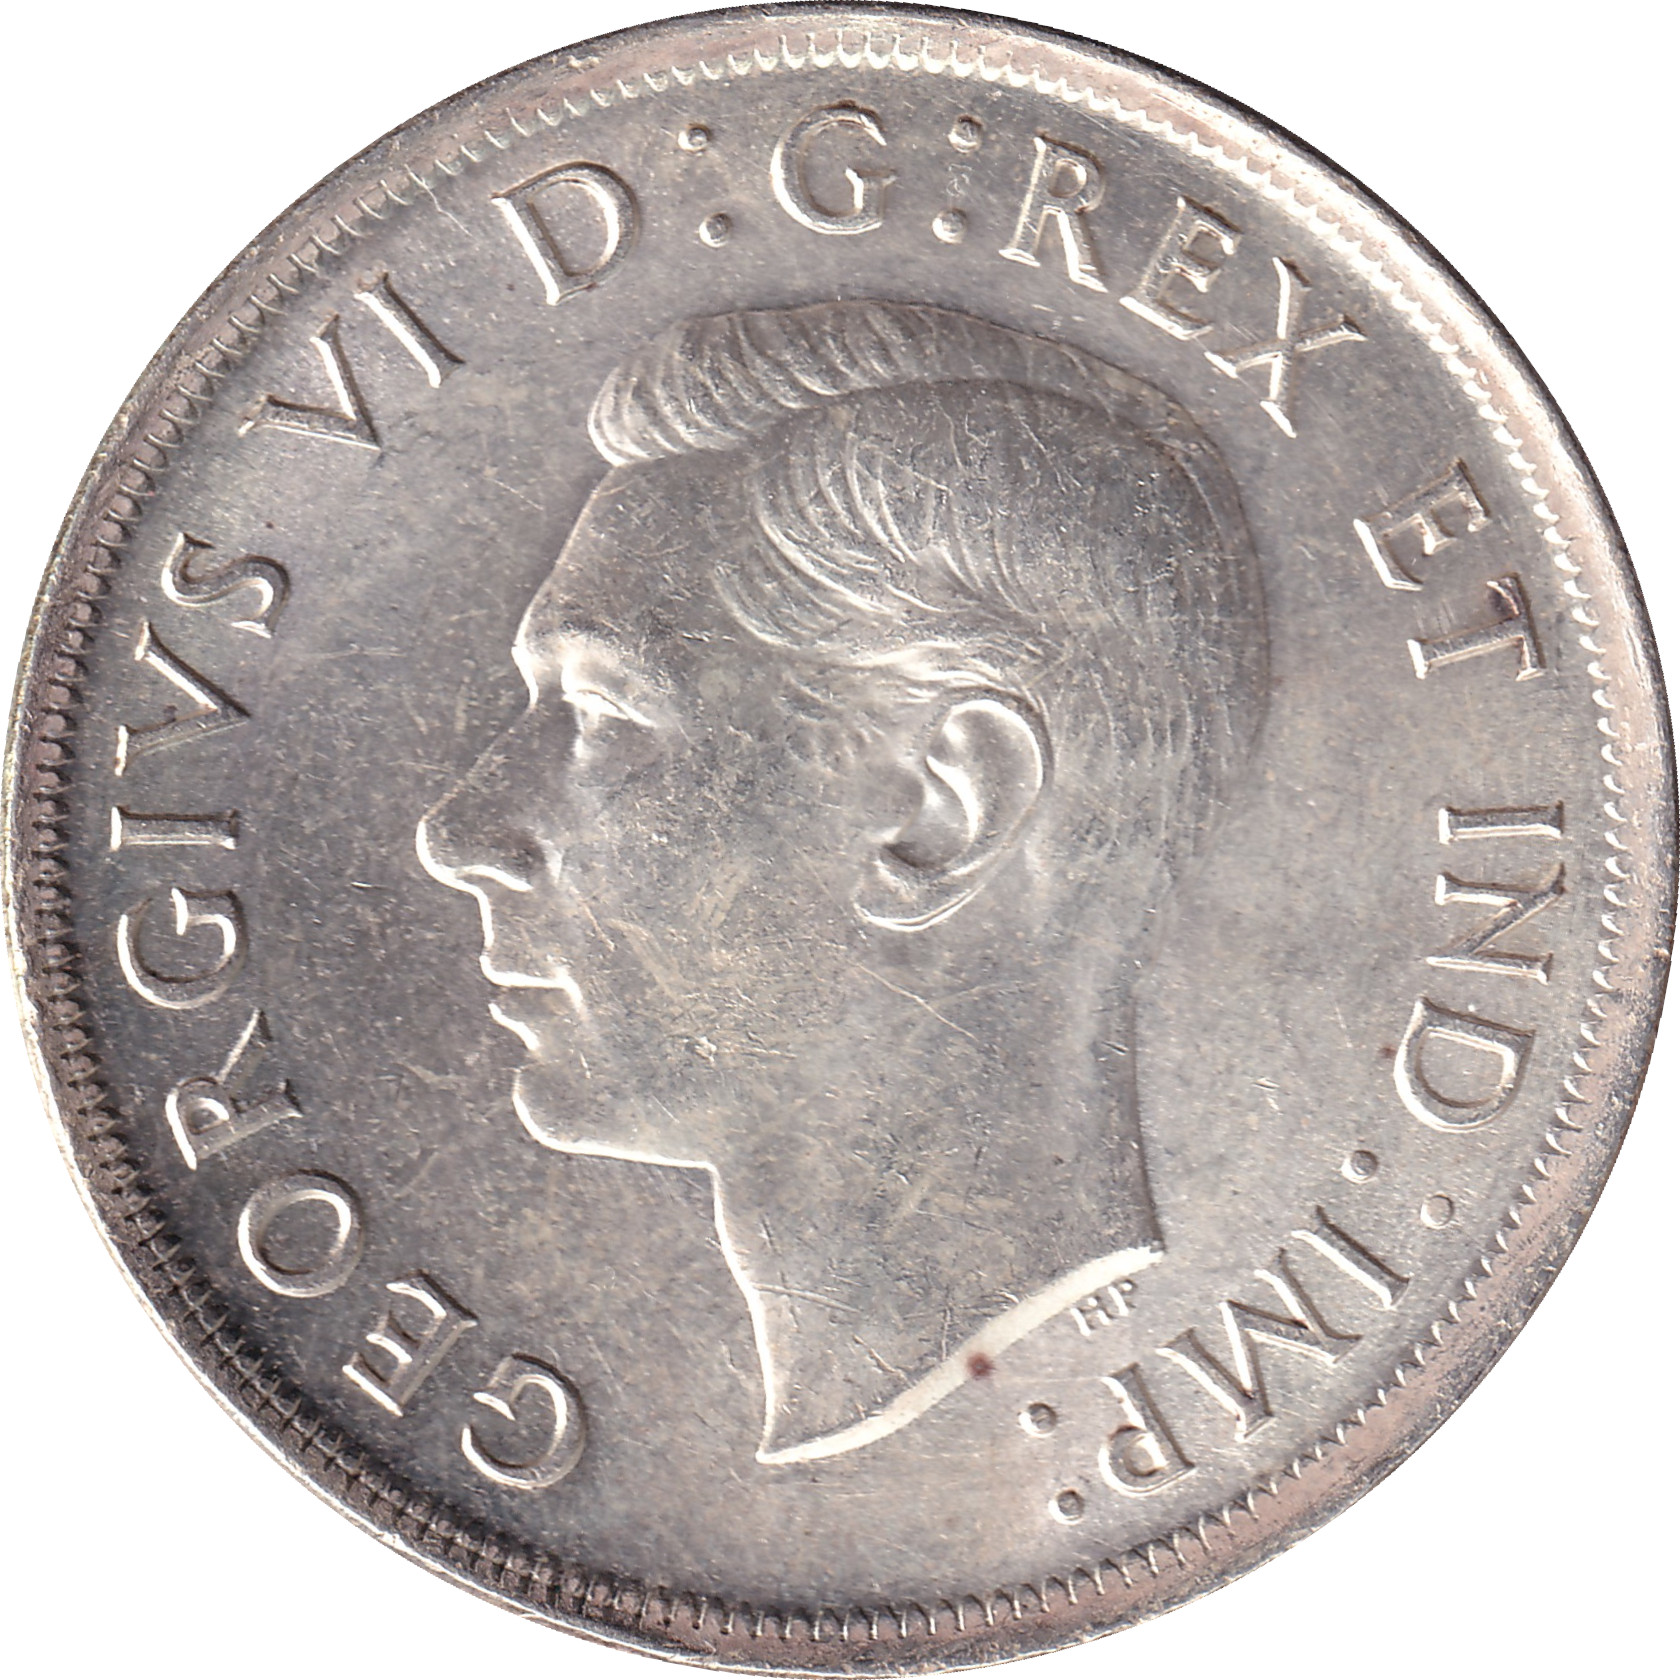 1 dollar - Georges VI - Visite royale